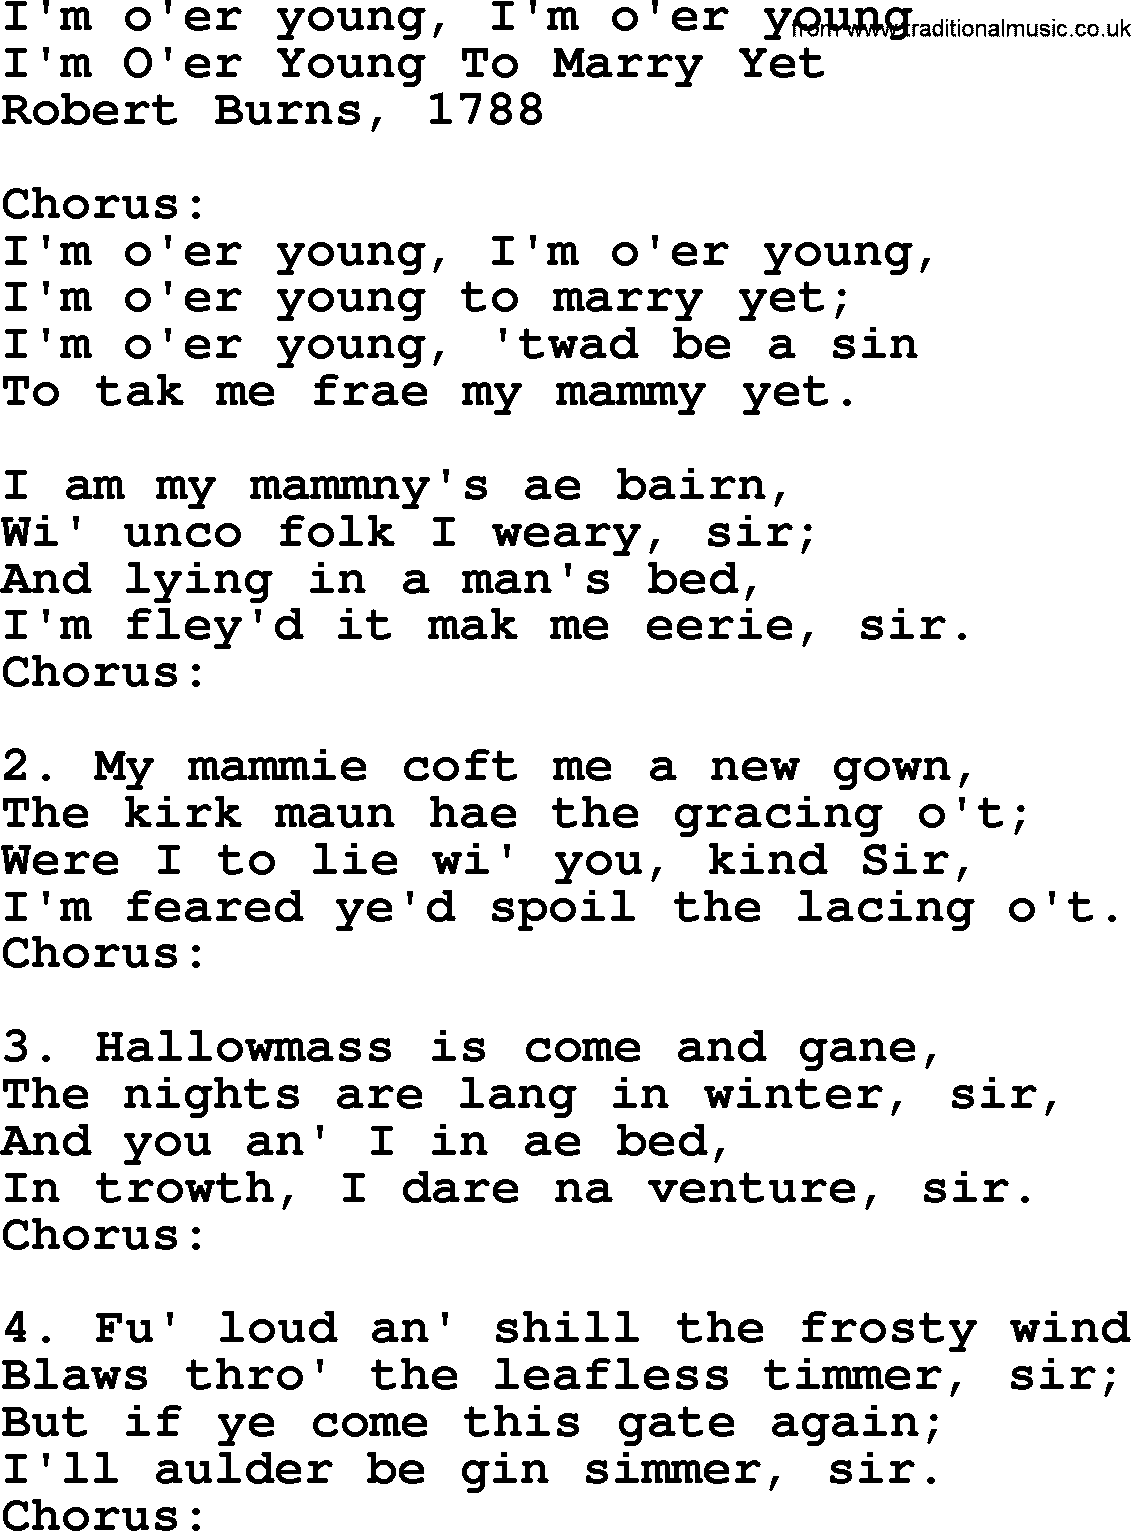 Robert Burns Songs & Lyrics: I'm O'er Young, I'm O'er Young